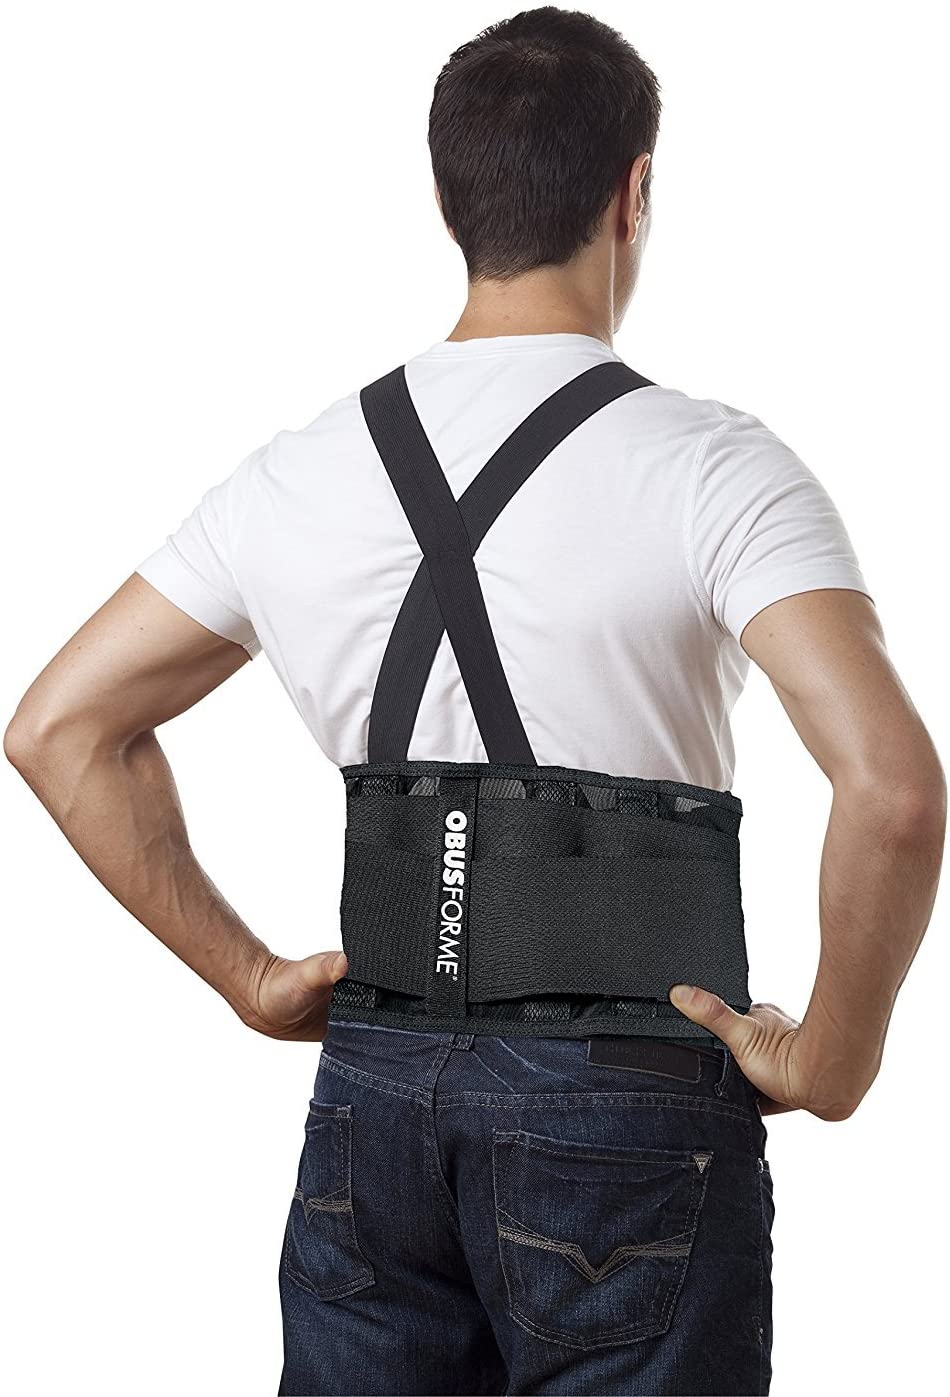 Unisex Back Belt With Suspenders Large/X-Large